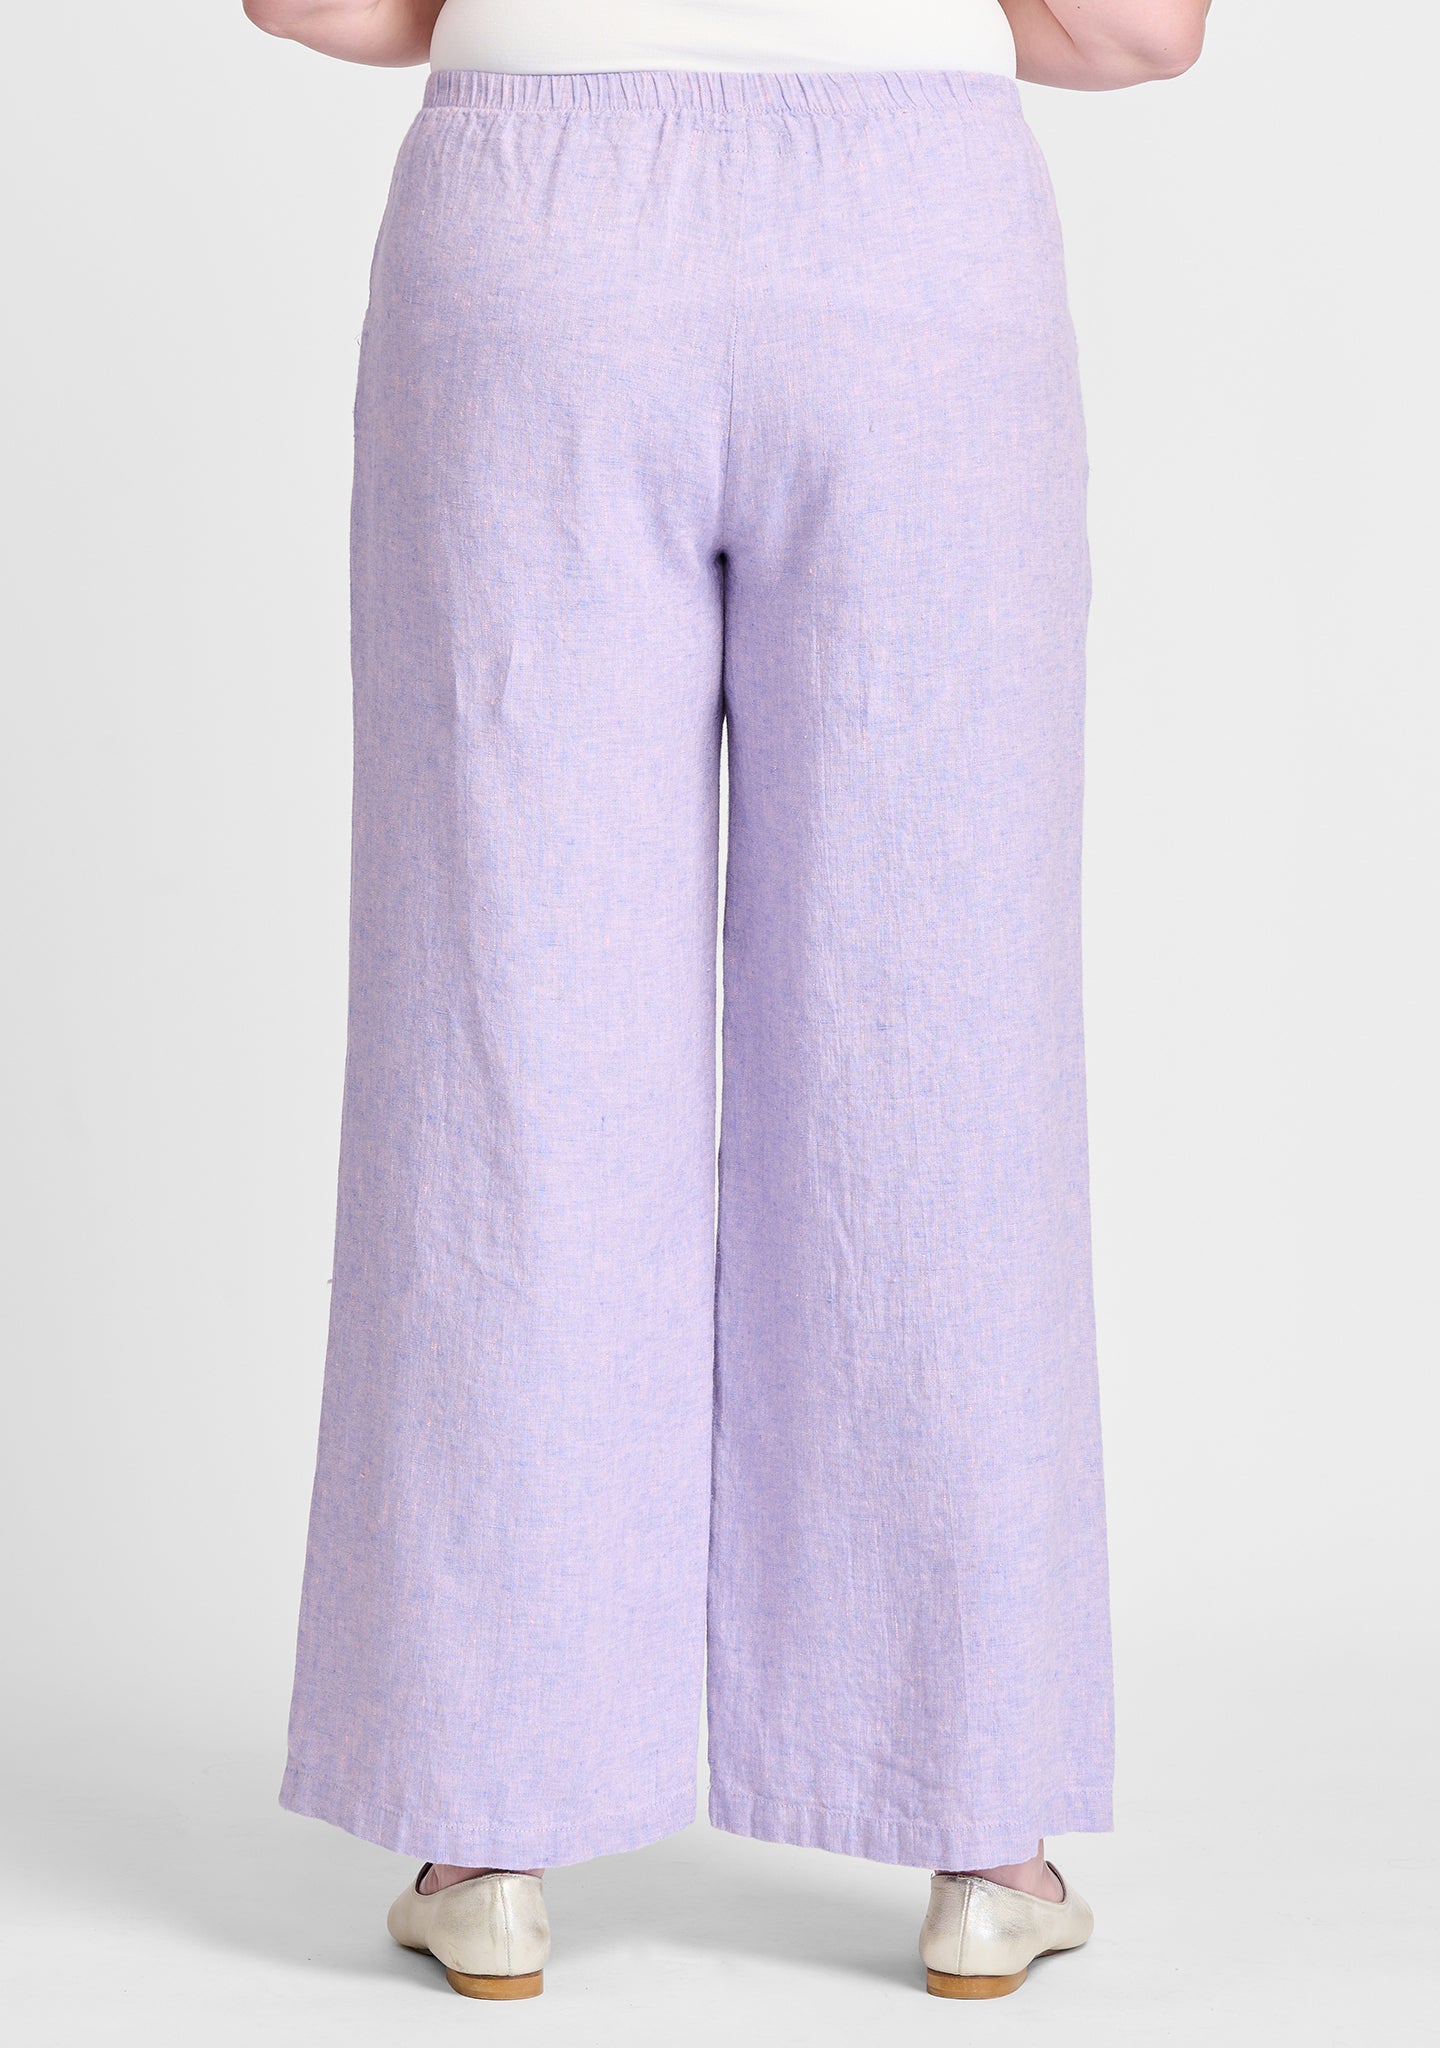 Flowing Pant - Linen Pants With Elastic Waist